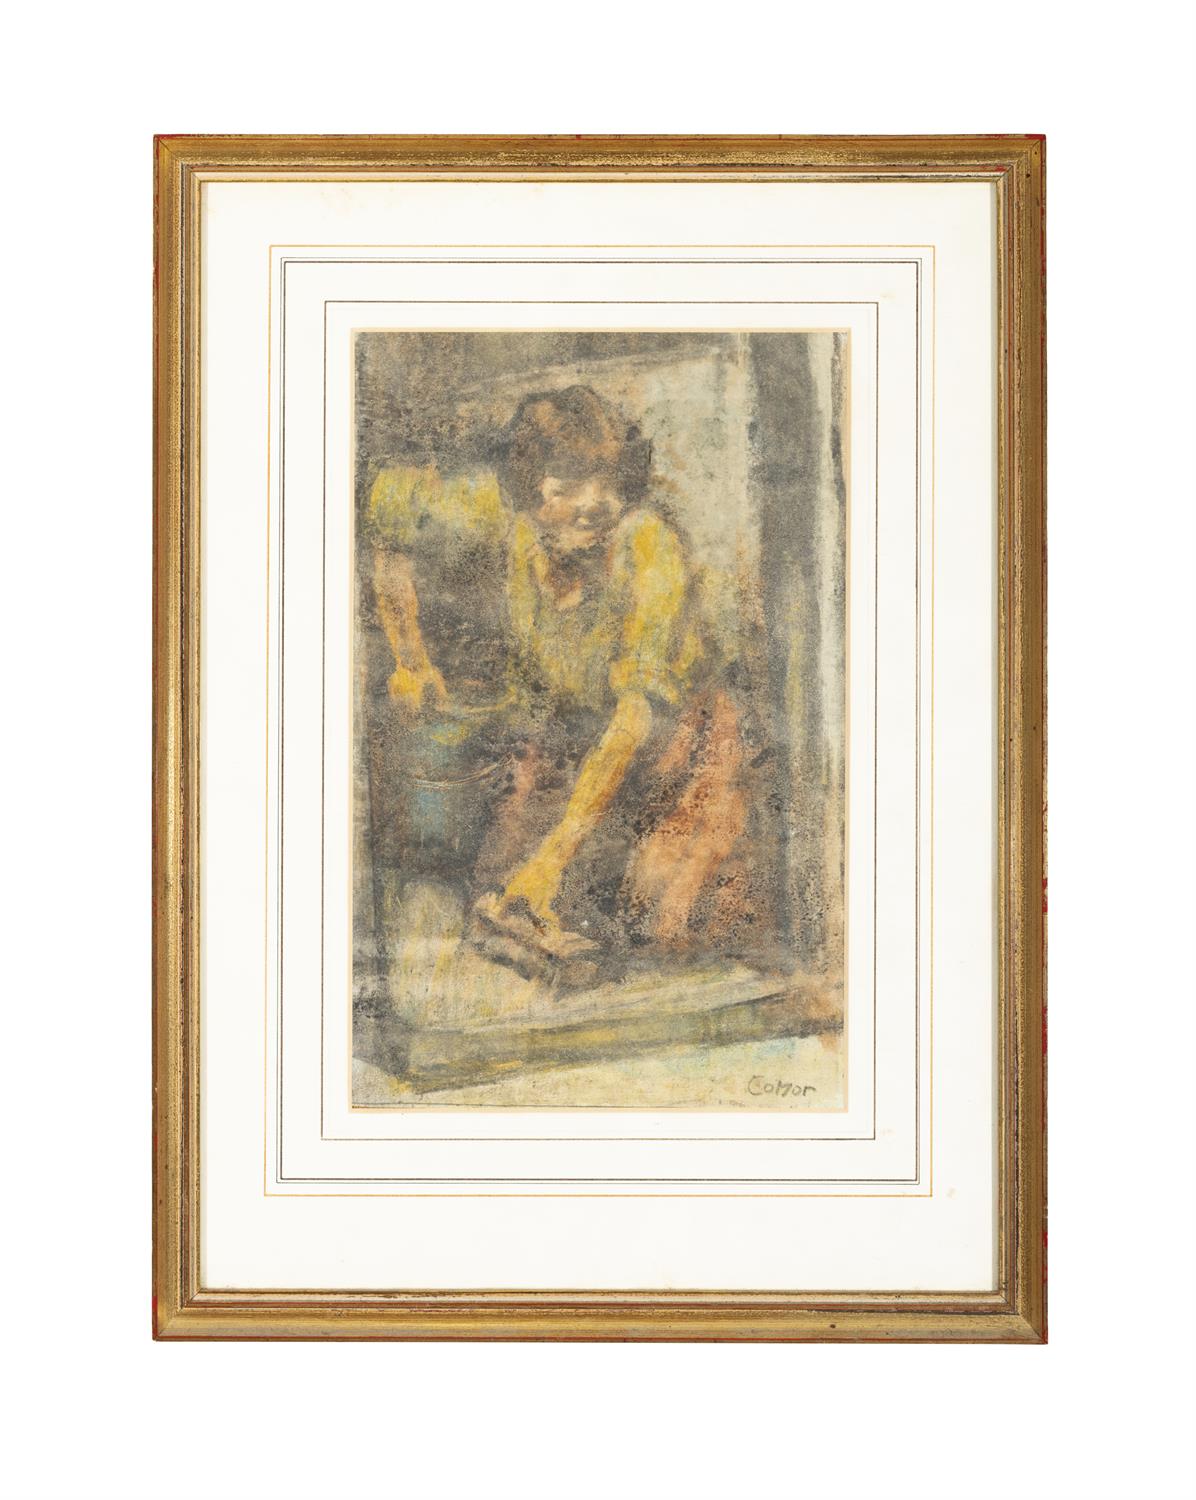 William Conor RUA RHA (1881 - 1968) Girl Scrubbing the Step Wax crayon 32 x 20cm (12 ½ x 8”) - Image 2 of 4